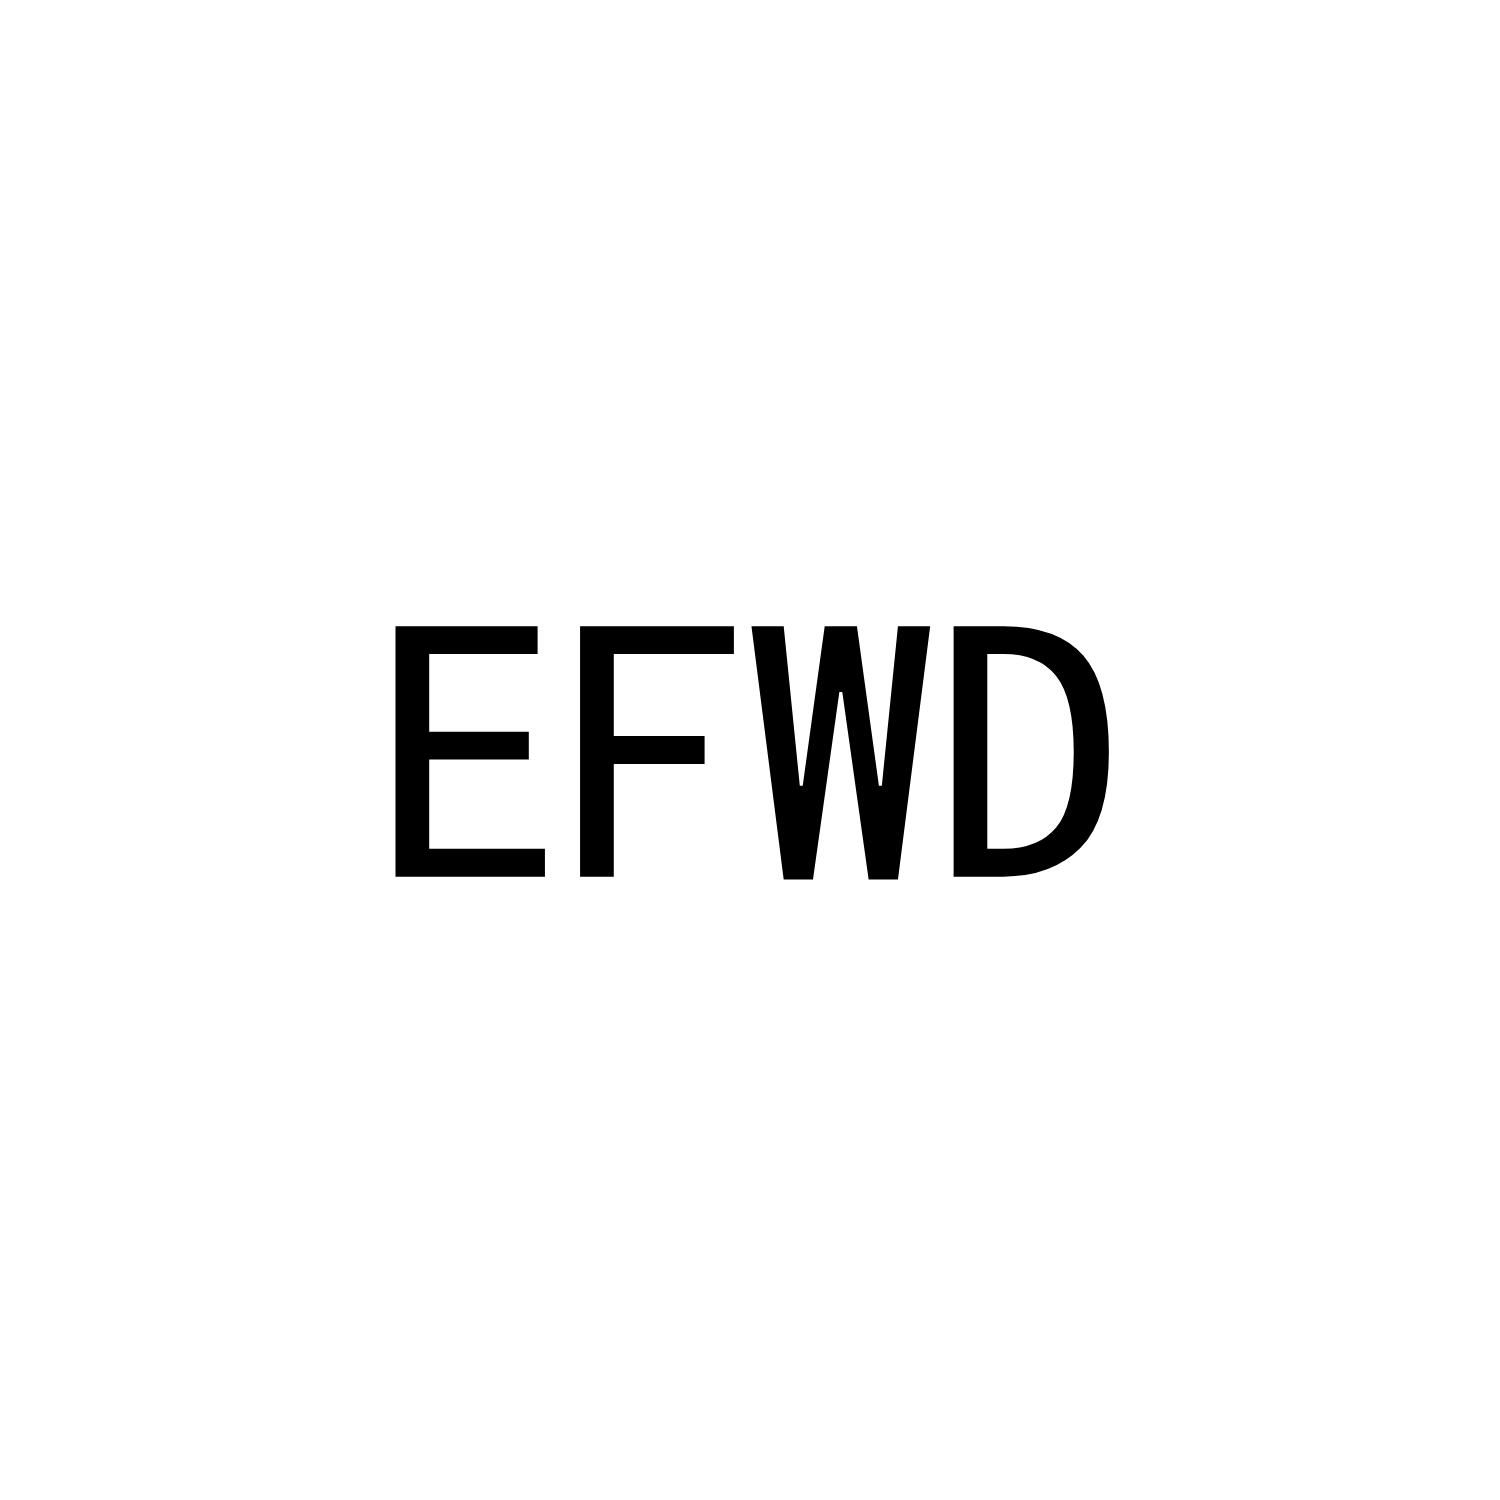 EFWD